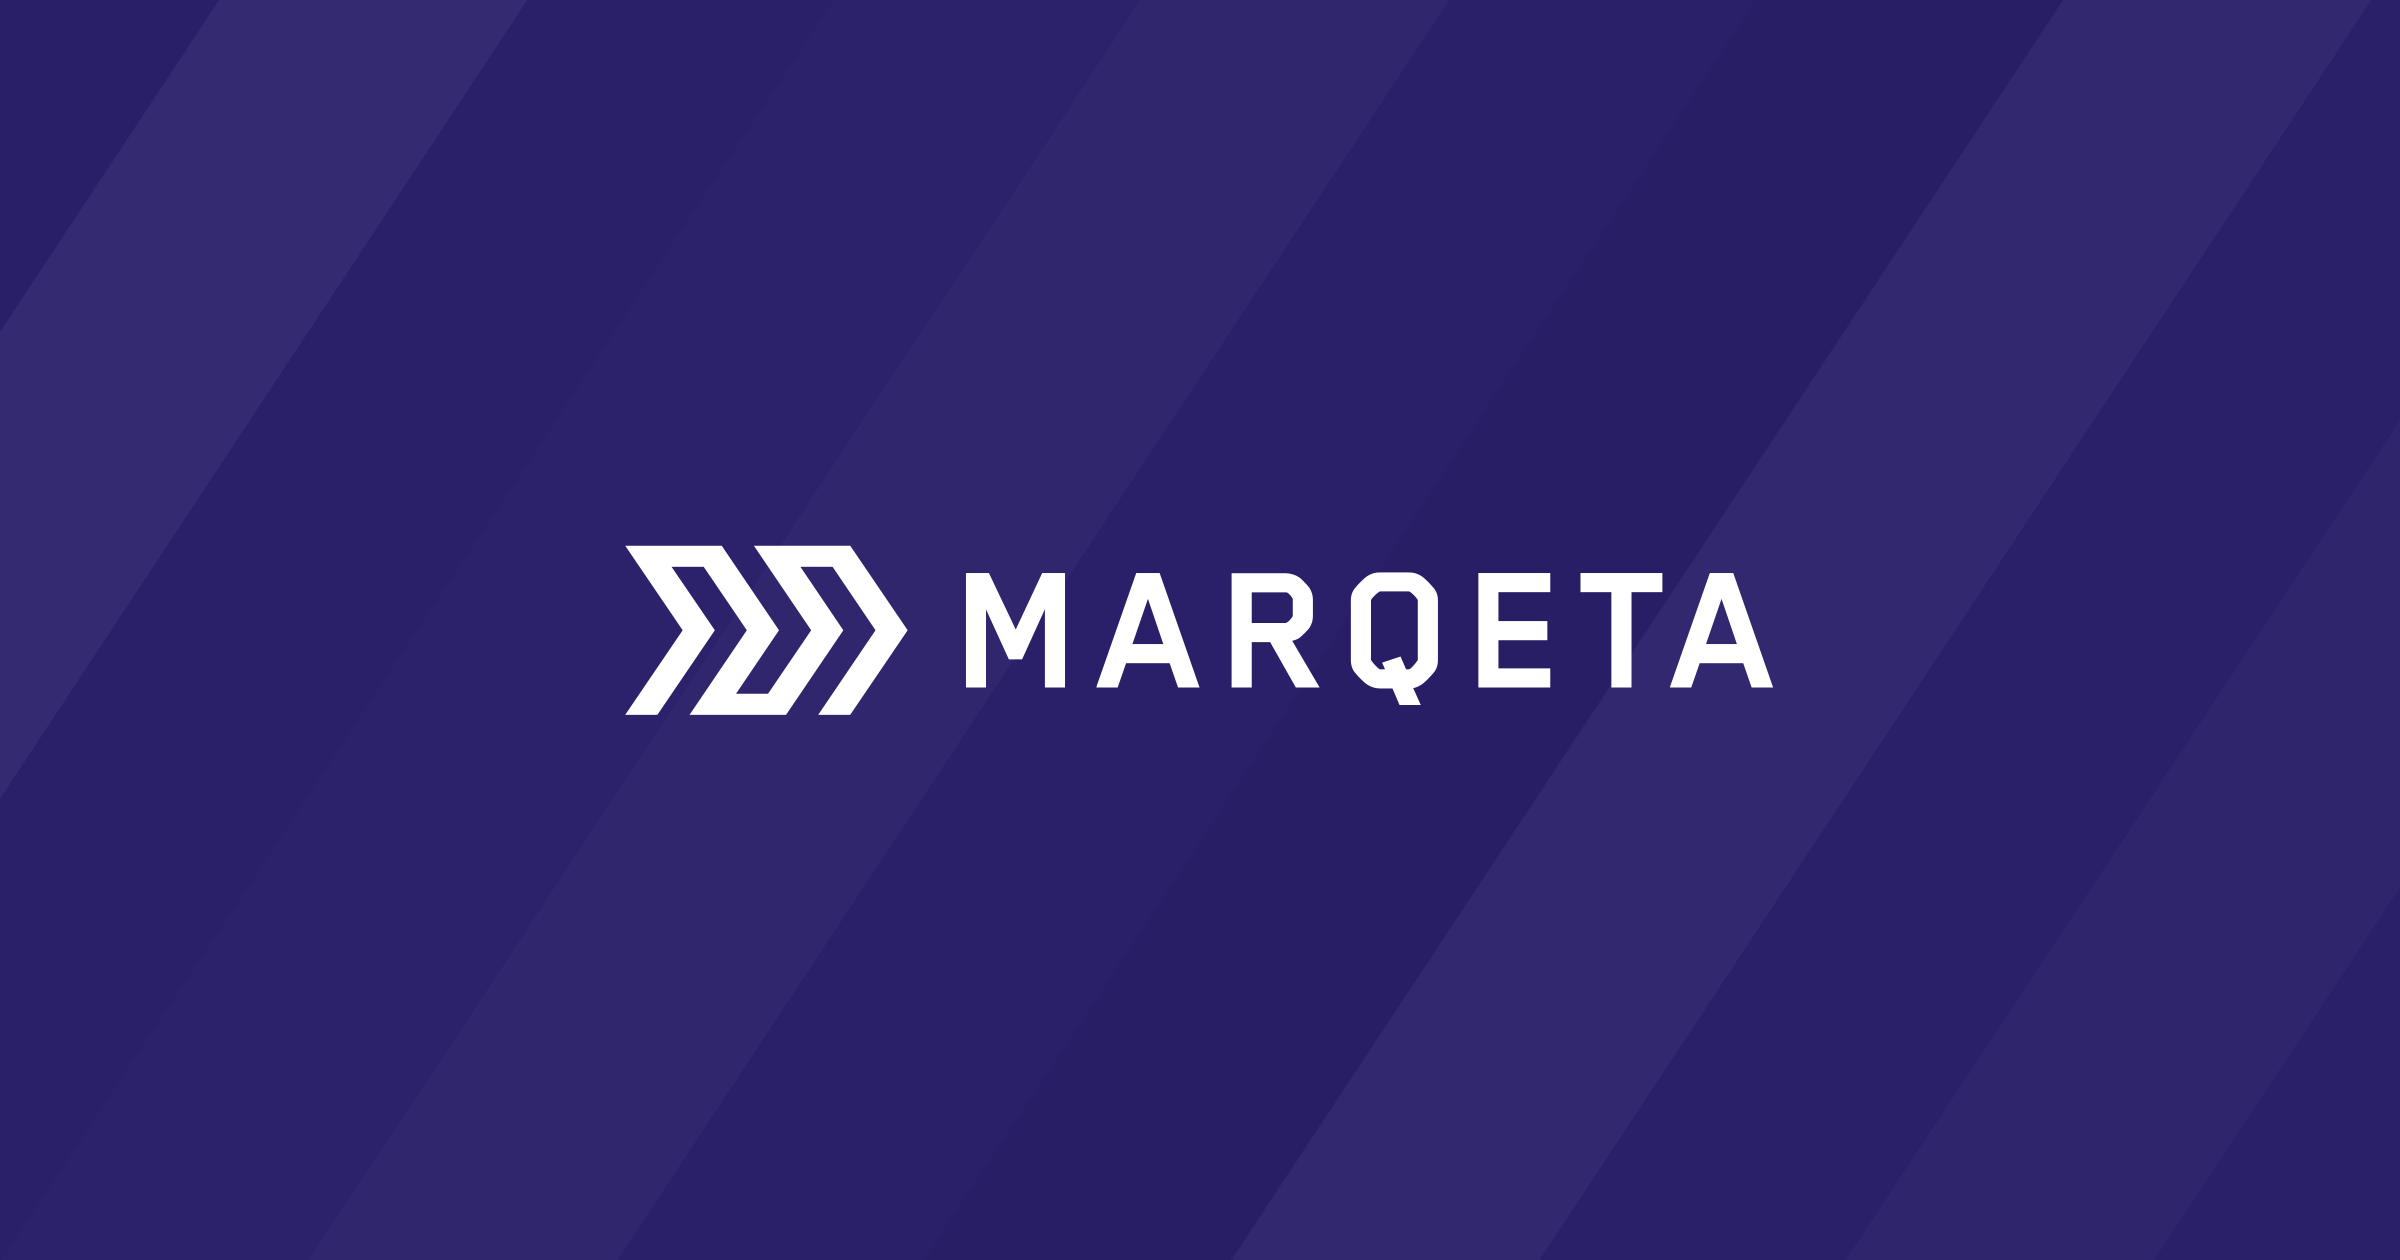 Marqeta Logo - The Modern Card Issuing Platform